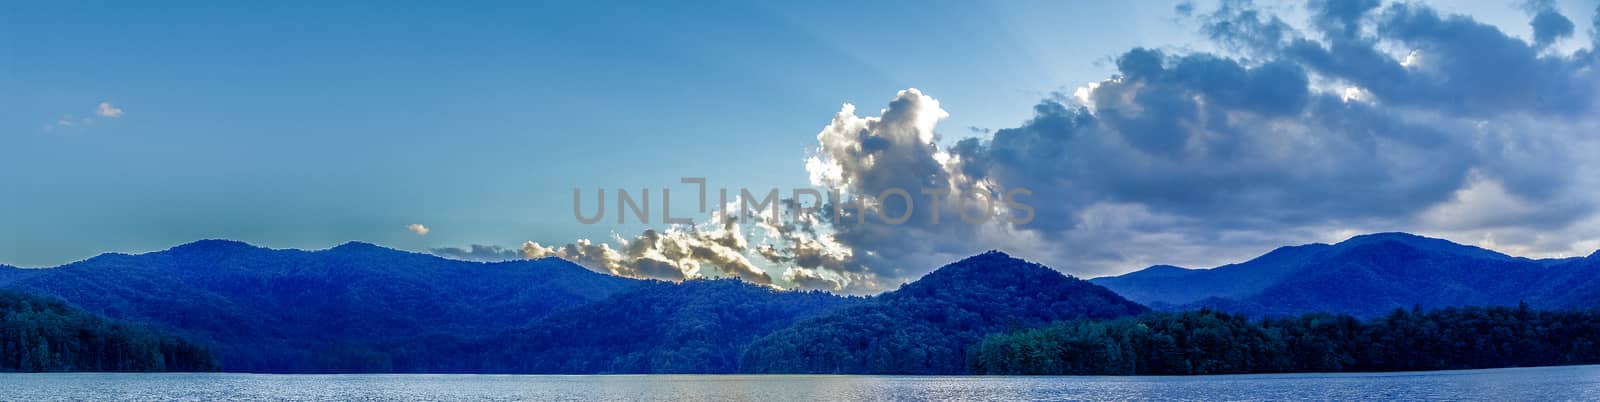 nature landscapes around lake santeetlah north carolina by digidreamgrafix